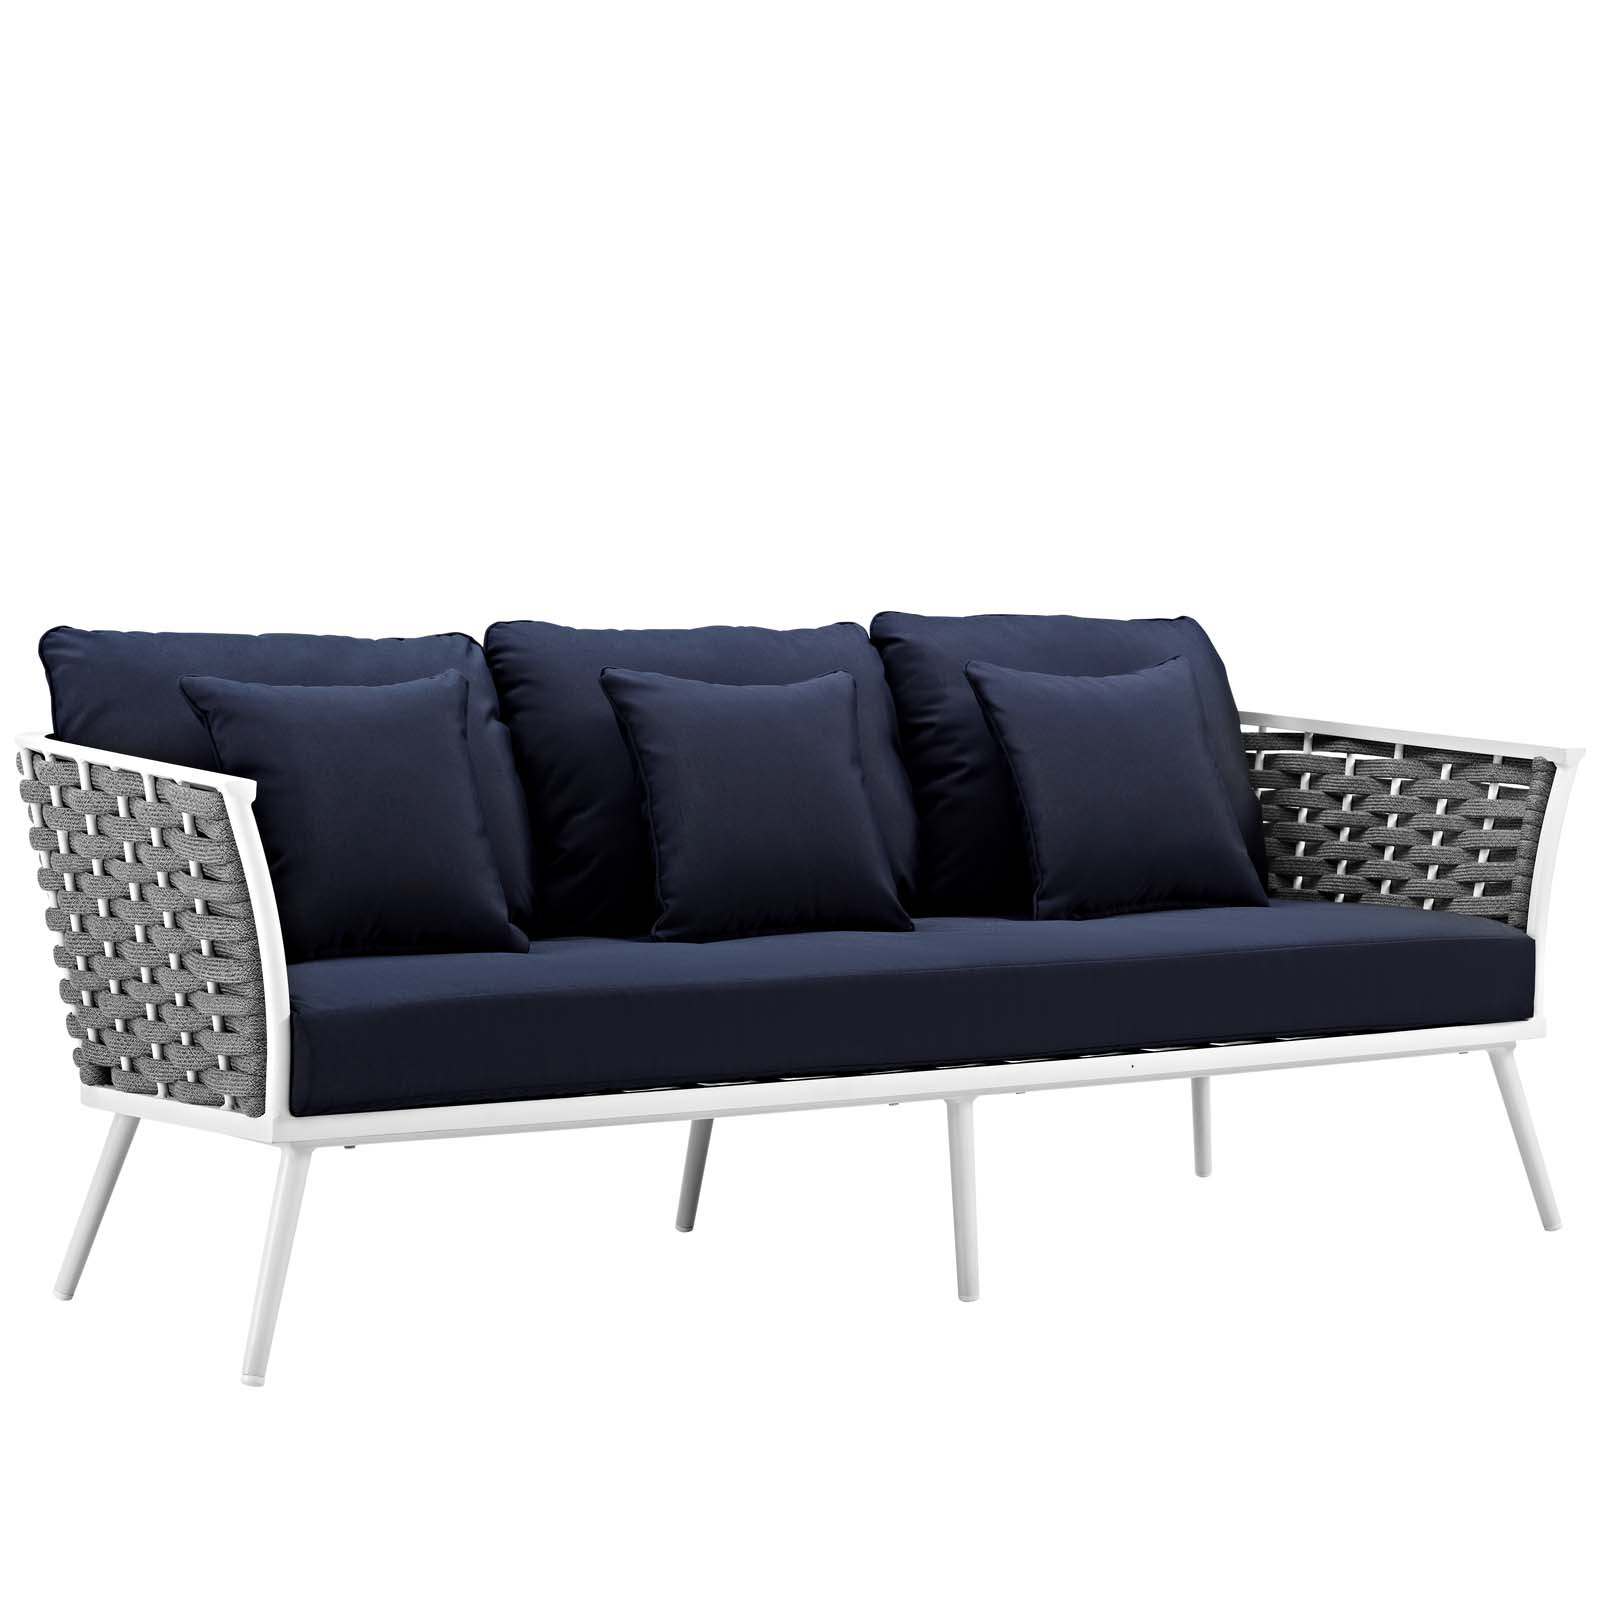 Modern Contemporary Urban Design Outdoor Patio Balcony Garden Furniture Lounge Chair, Sofa and Table Set, Fabric Aluminium, White Navy - image 5 of 8